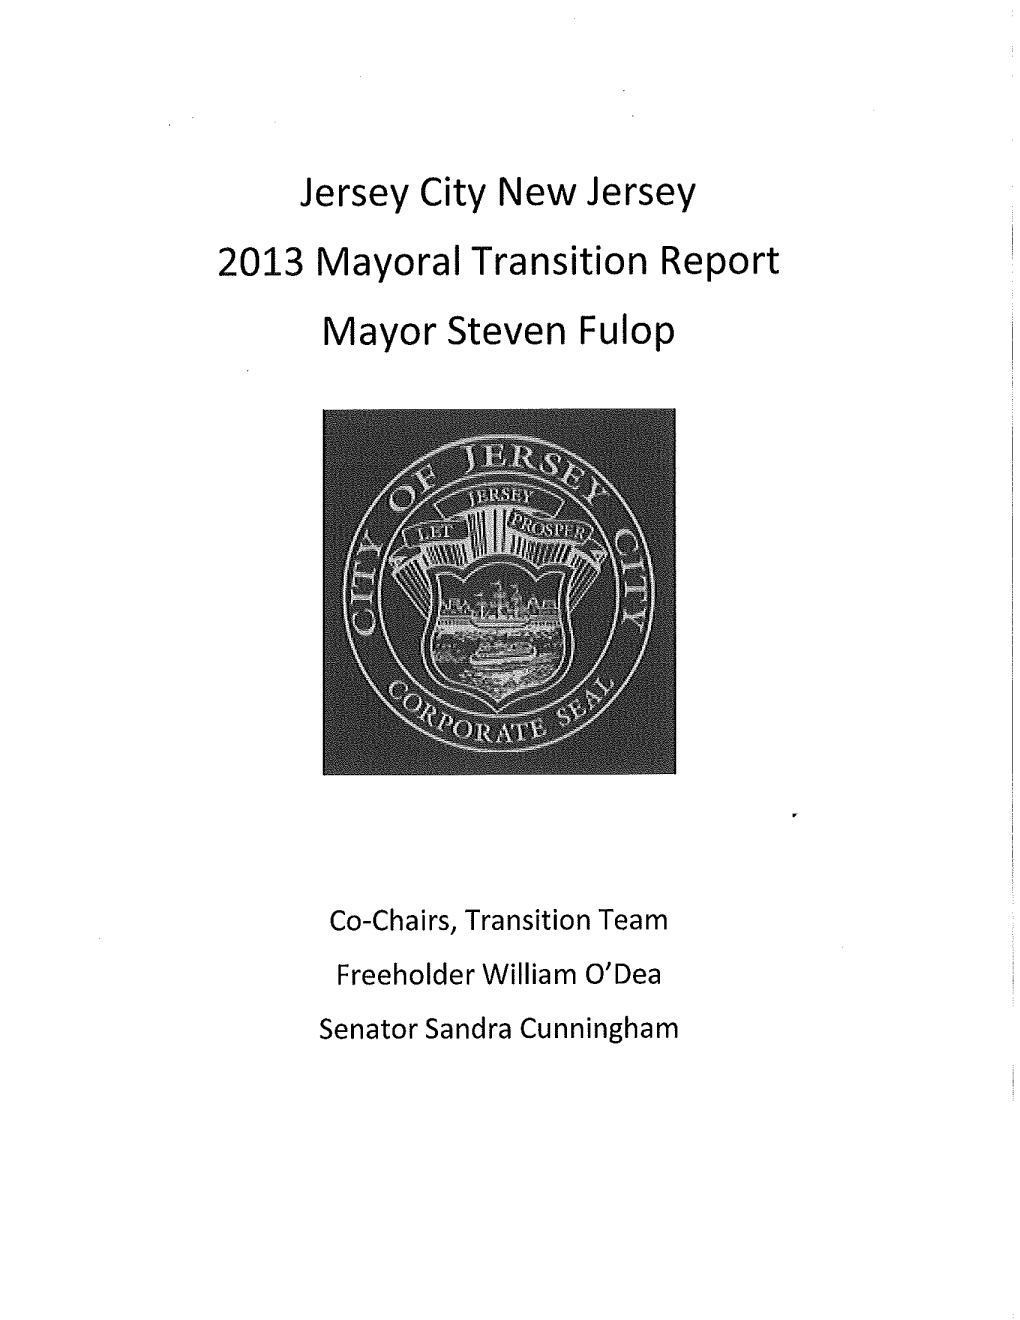 Jersey City New Jersey 2013 Mayoral Transition Report Mayor Steven Fulop